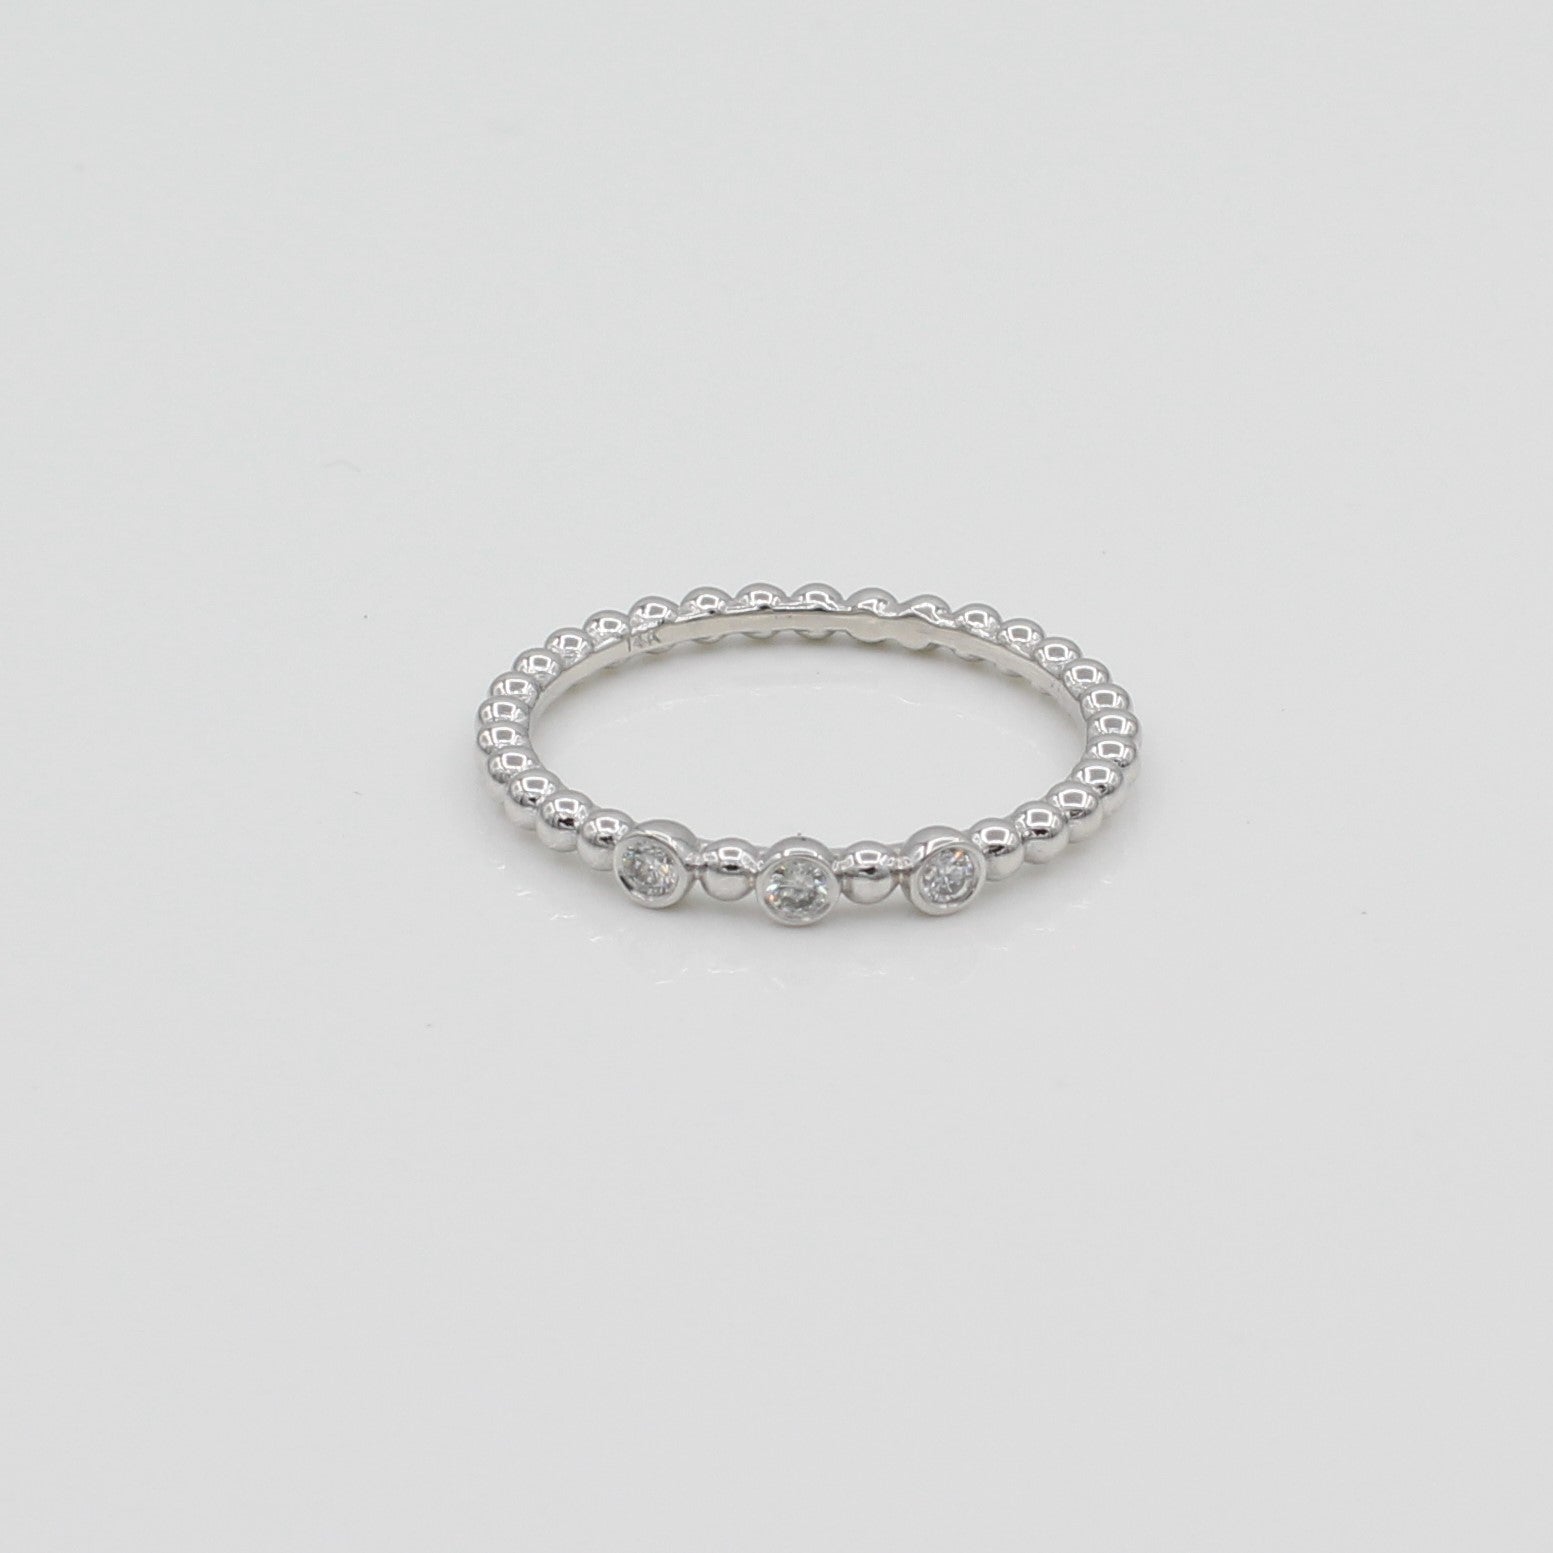 14k White Gold Triple Bezel-Set Diamond Beaded Ring, front view of ring displaying the triple bezel-set diamond design, 